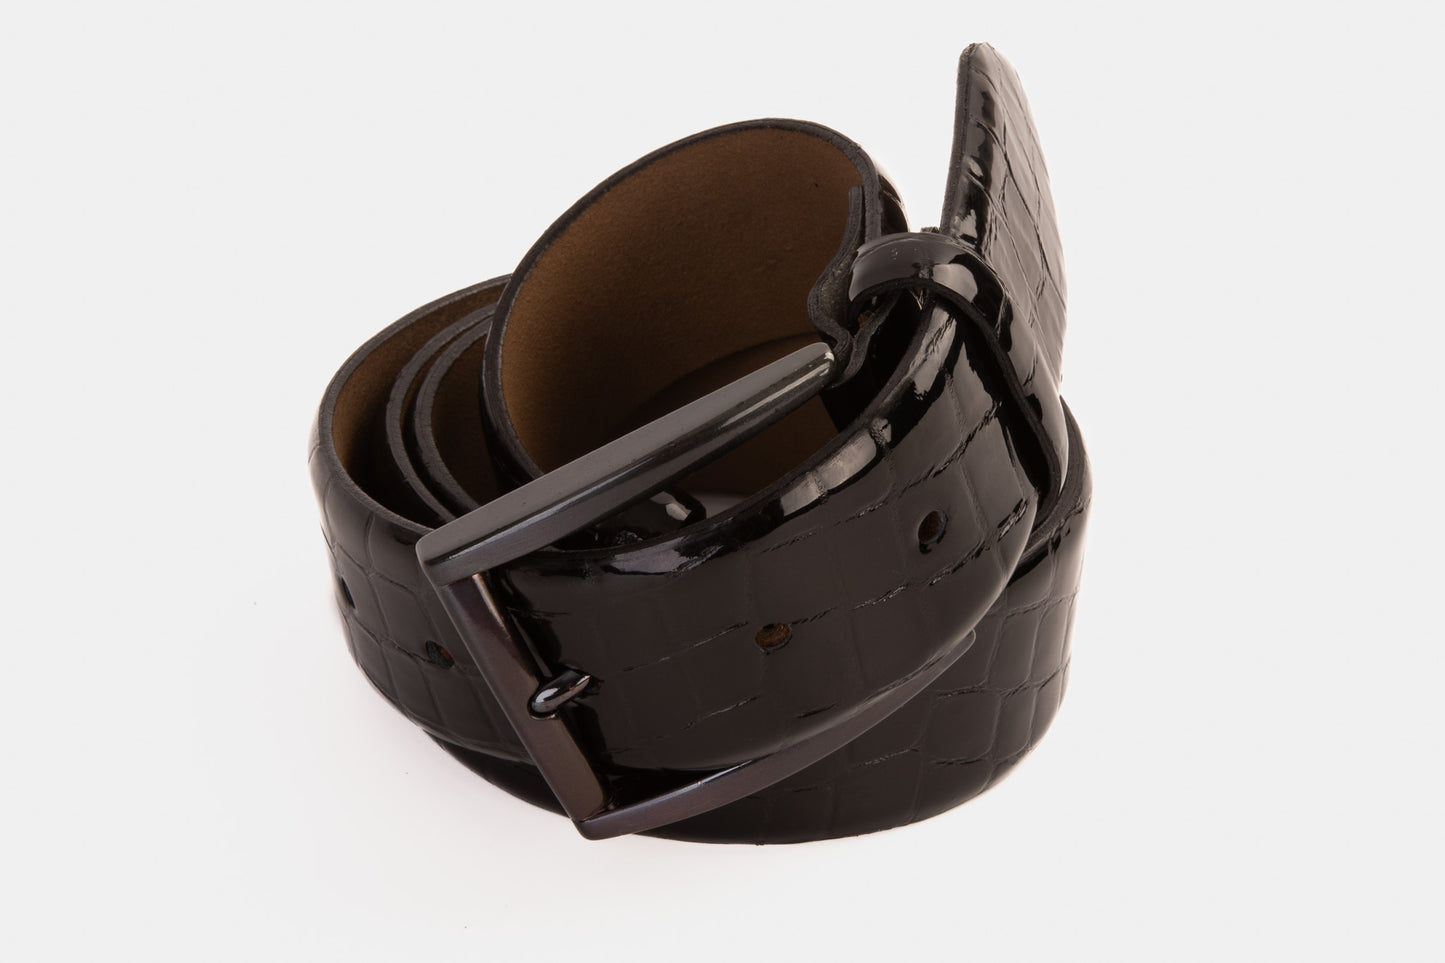 The Cordova Black Patent Leather Belt